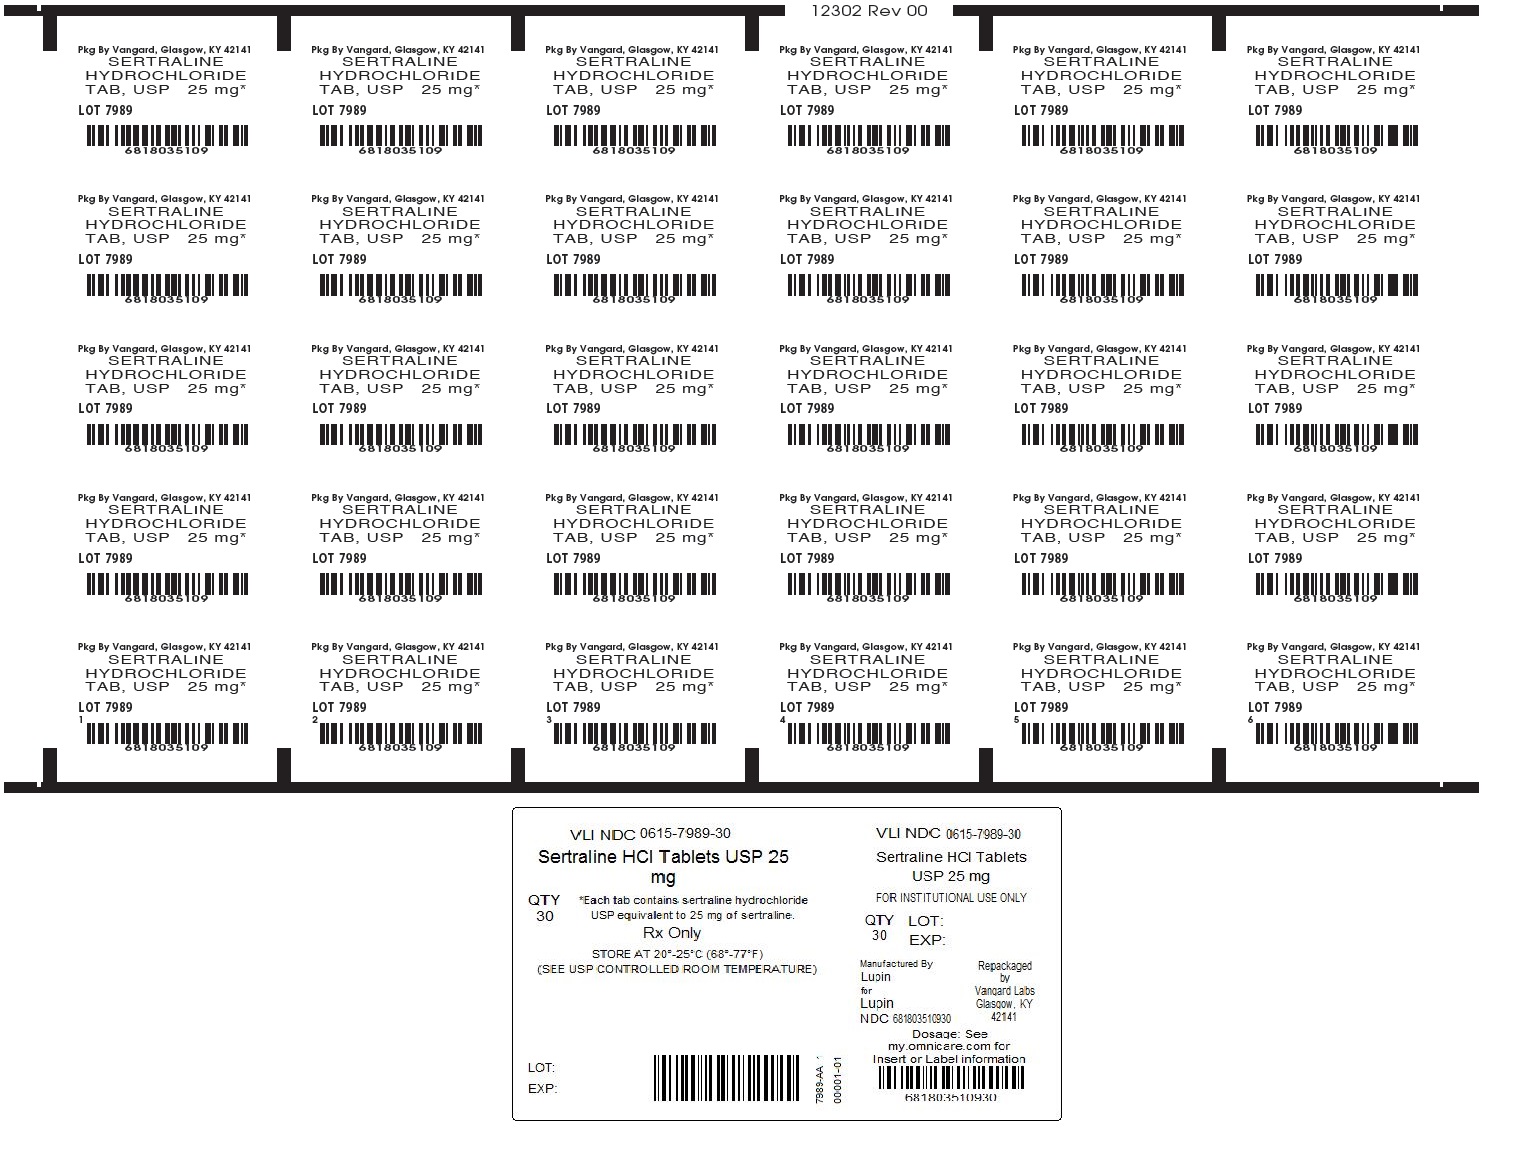 Sertraline 25mg Tabs Unit dose box label